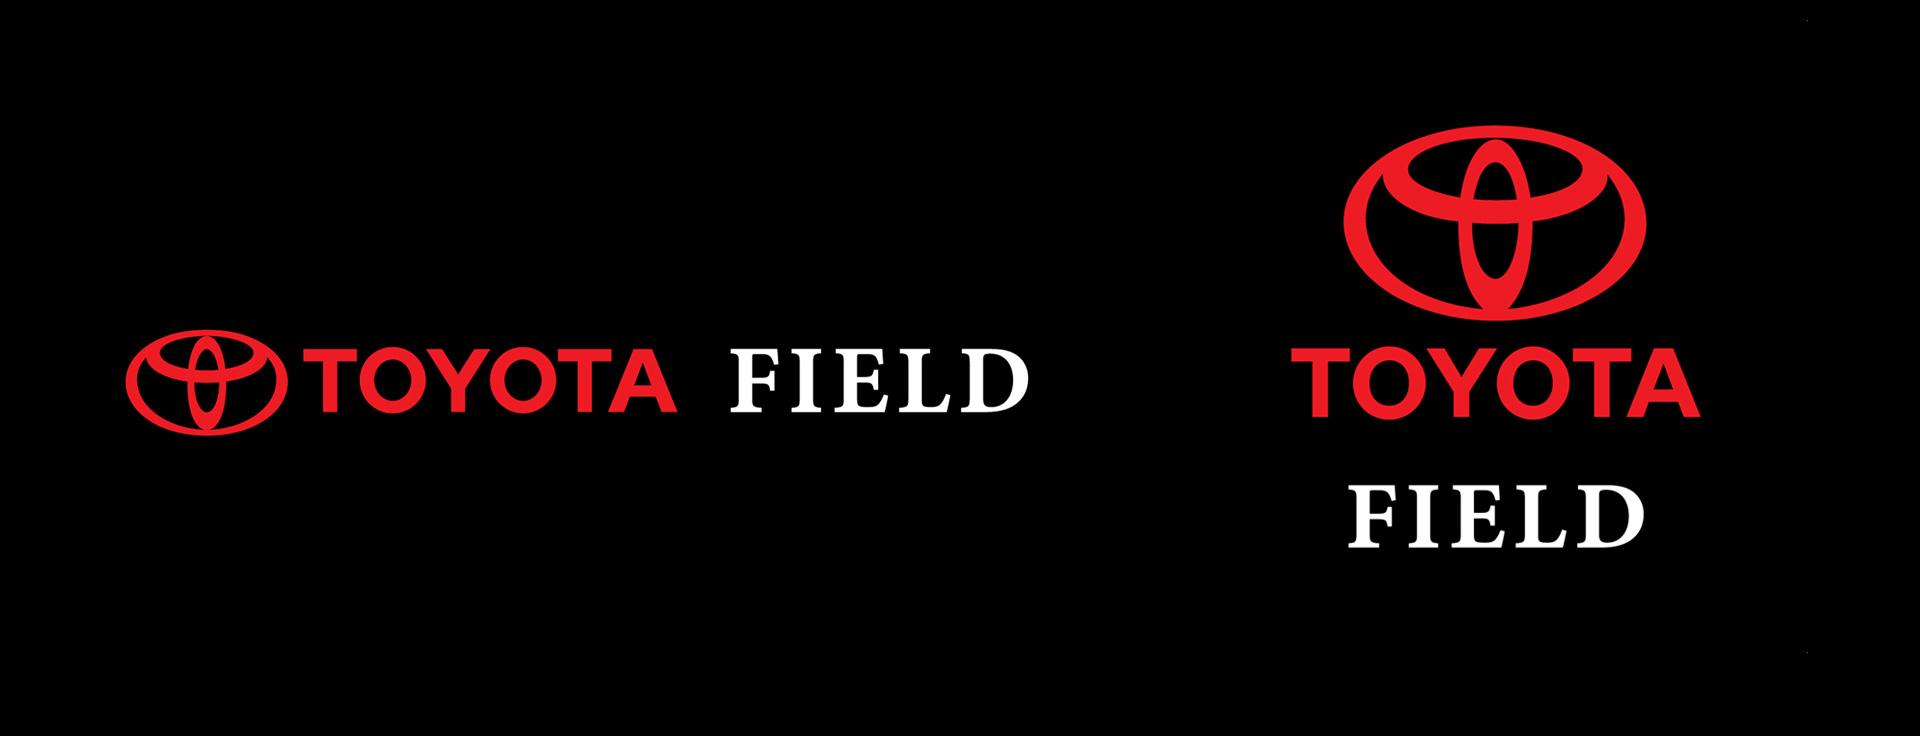 Toyota Field Logo Black